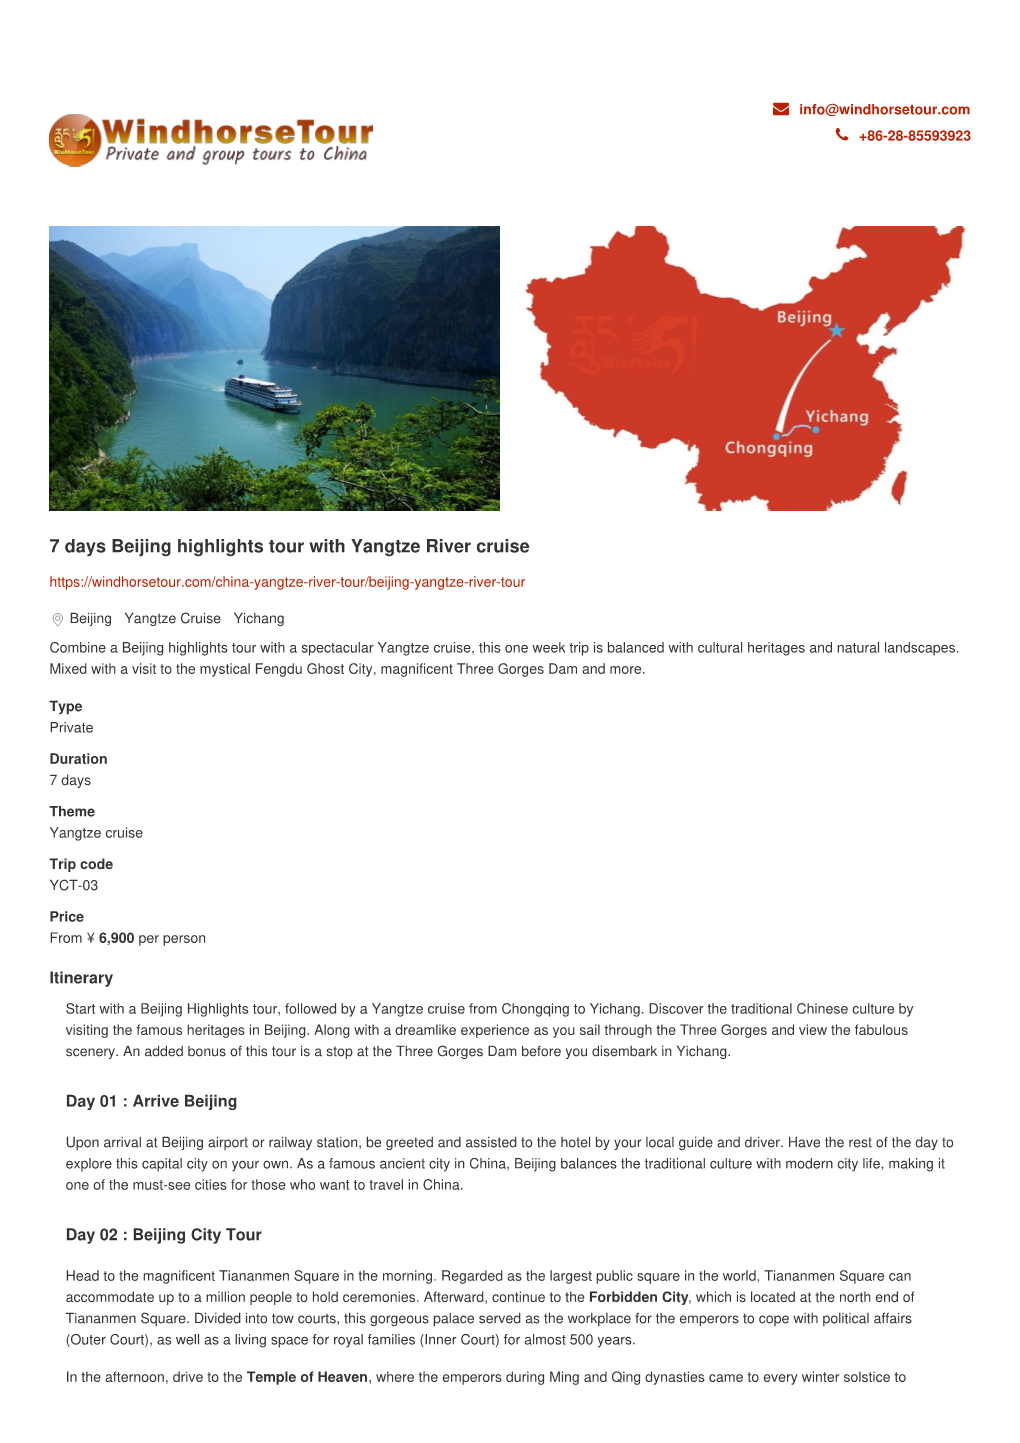 7 Days Beijing Highlights Tour with Yangtze River Cruise